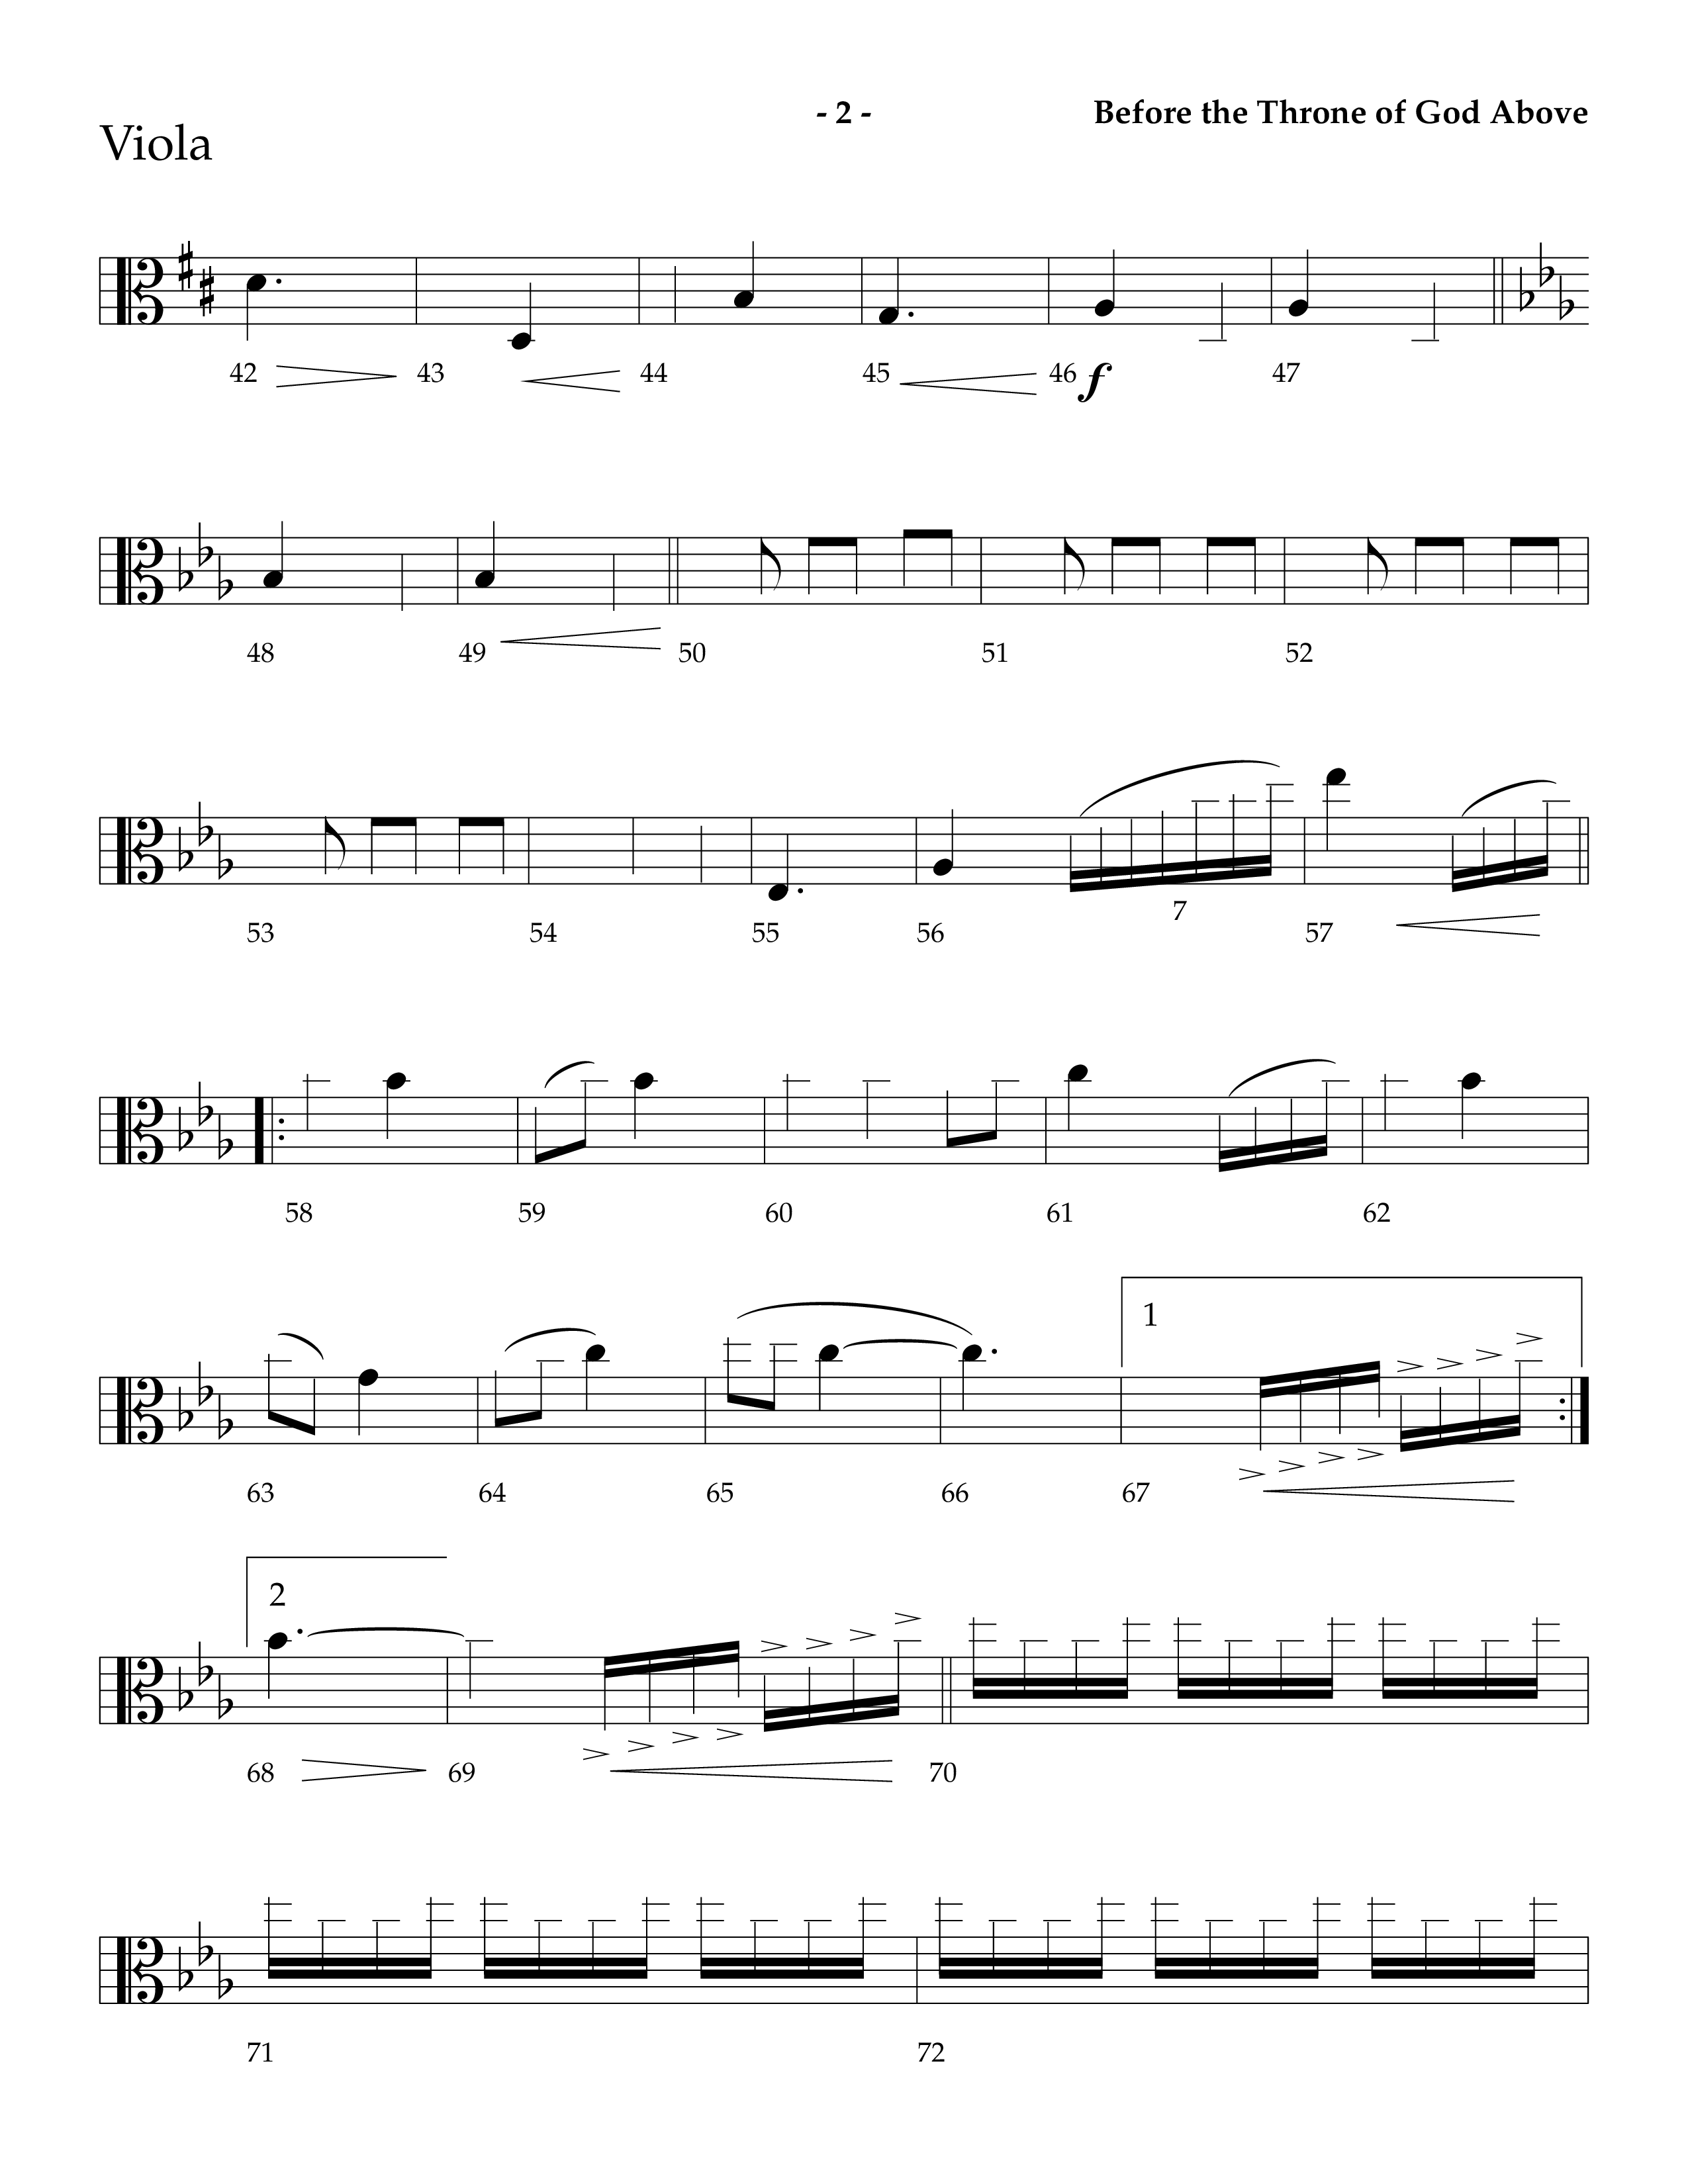 Before The Throne Of God Above (Choral Anthem SATB) Viola (Lifeway Choral / Arr. Camp Kirkland)